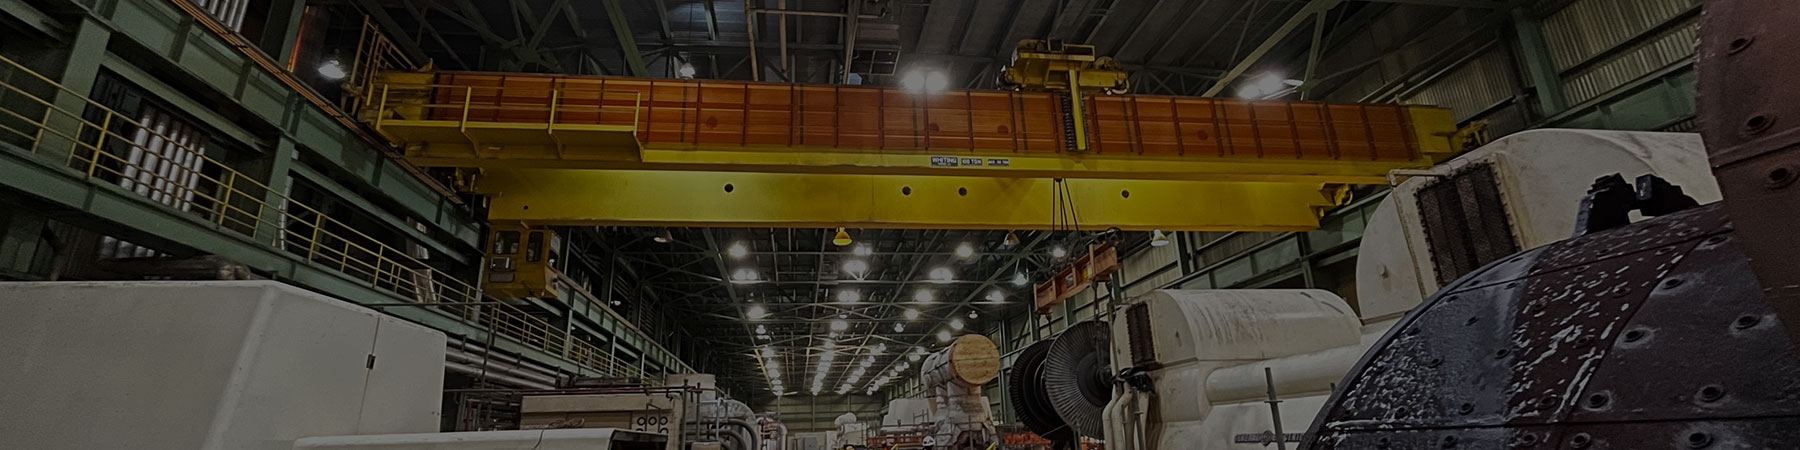 Turbine crane modernization performed at steam generation plant.